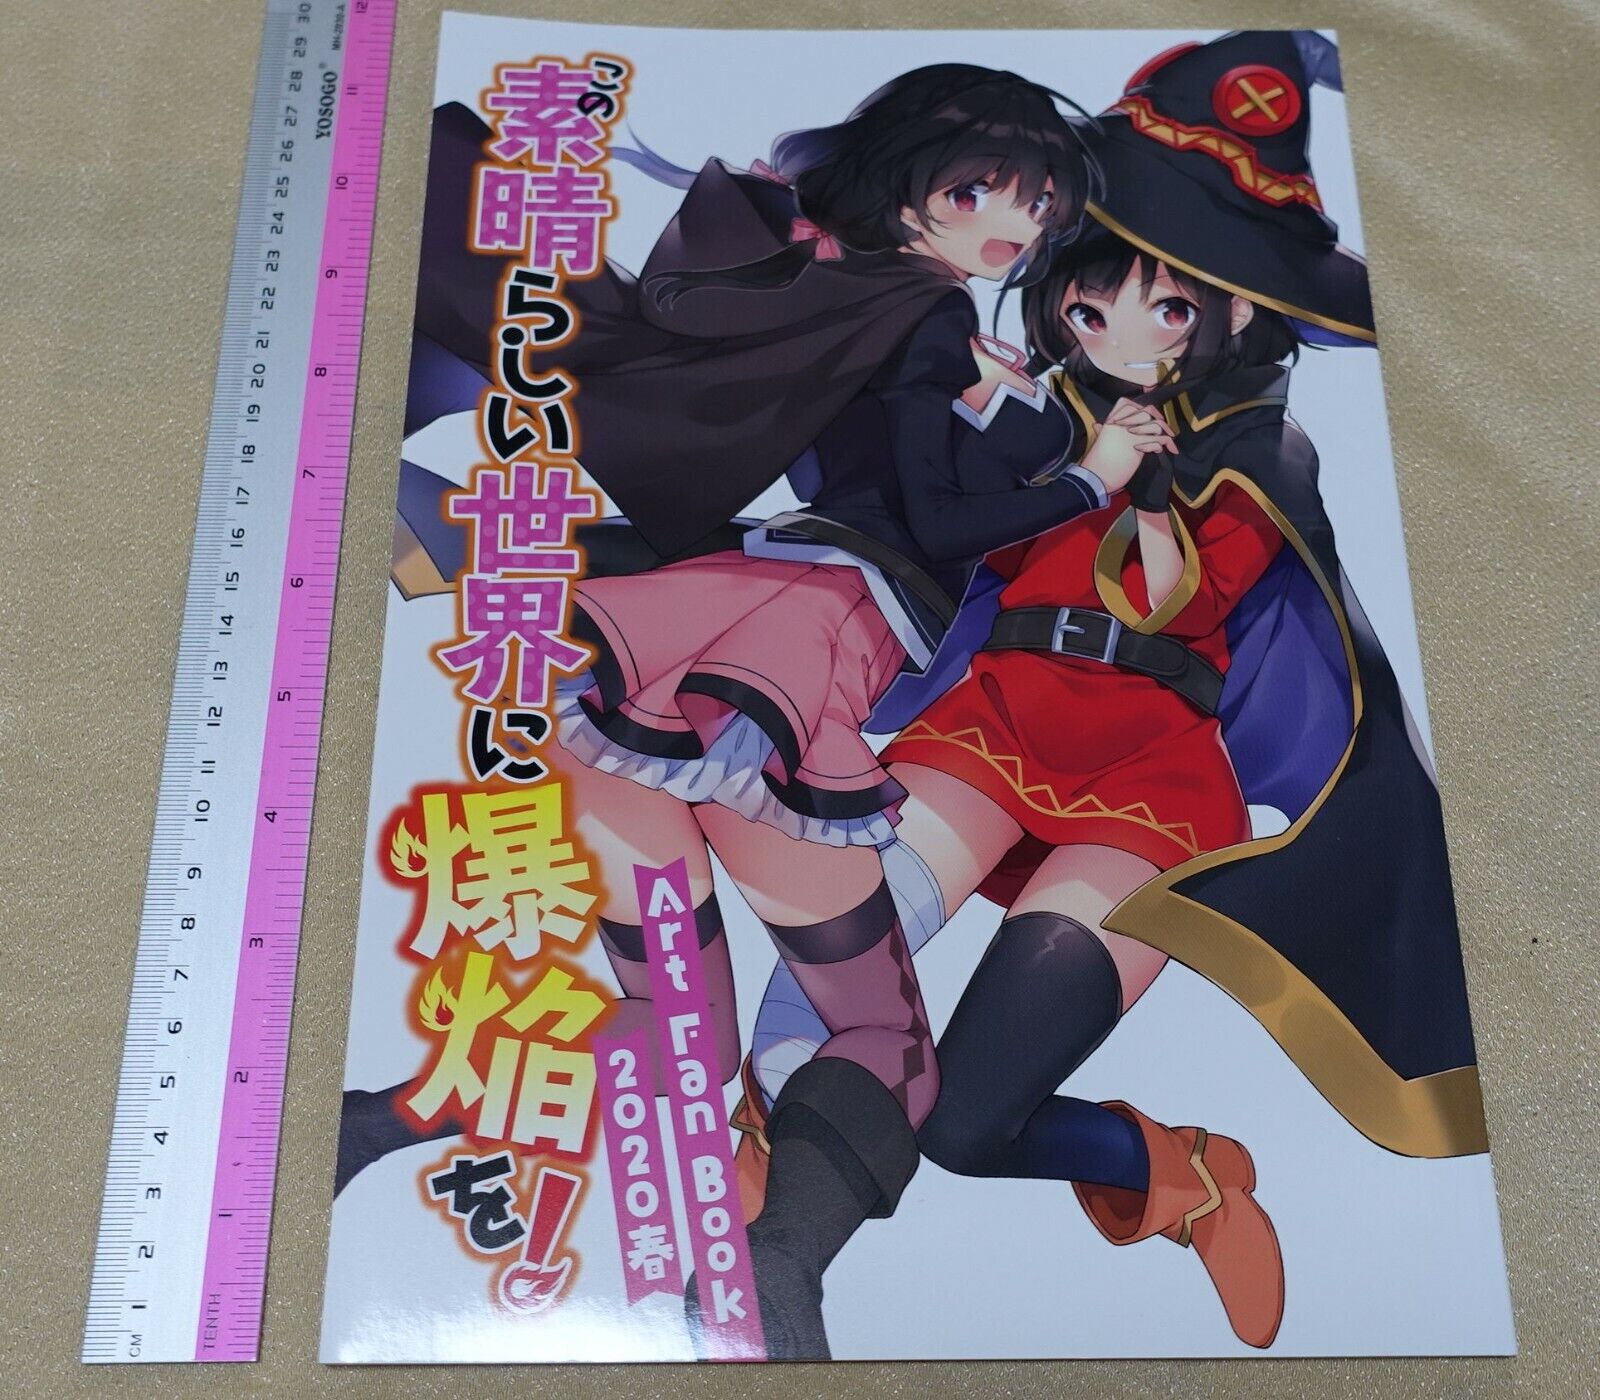 Konosuba Coloring Book: Kazuma Sato Adventure Anime Manga Coloring Book Get  Creative Be Inspired Have Fun